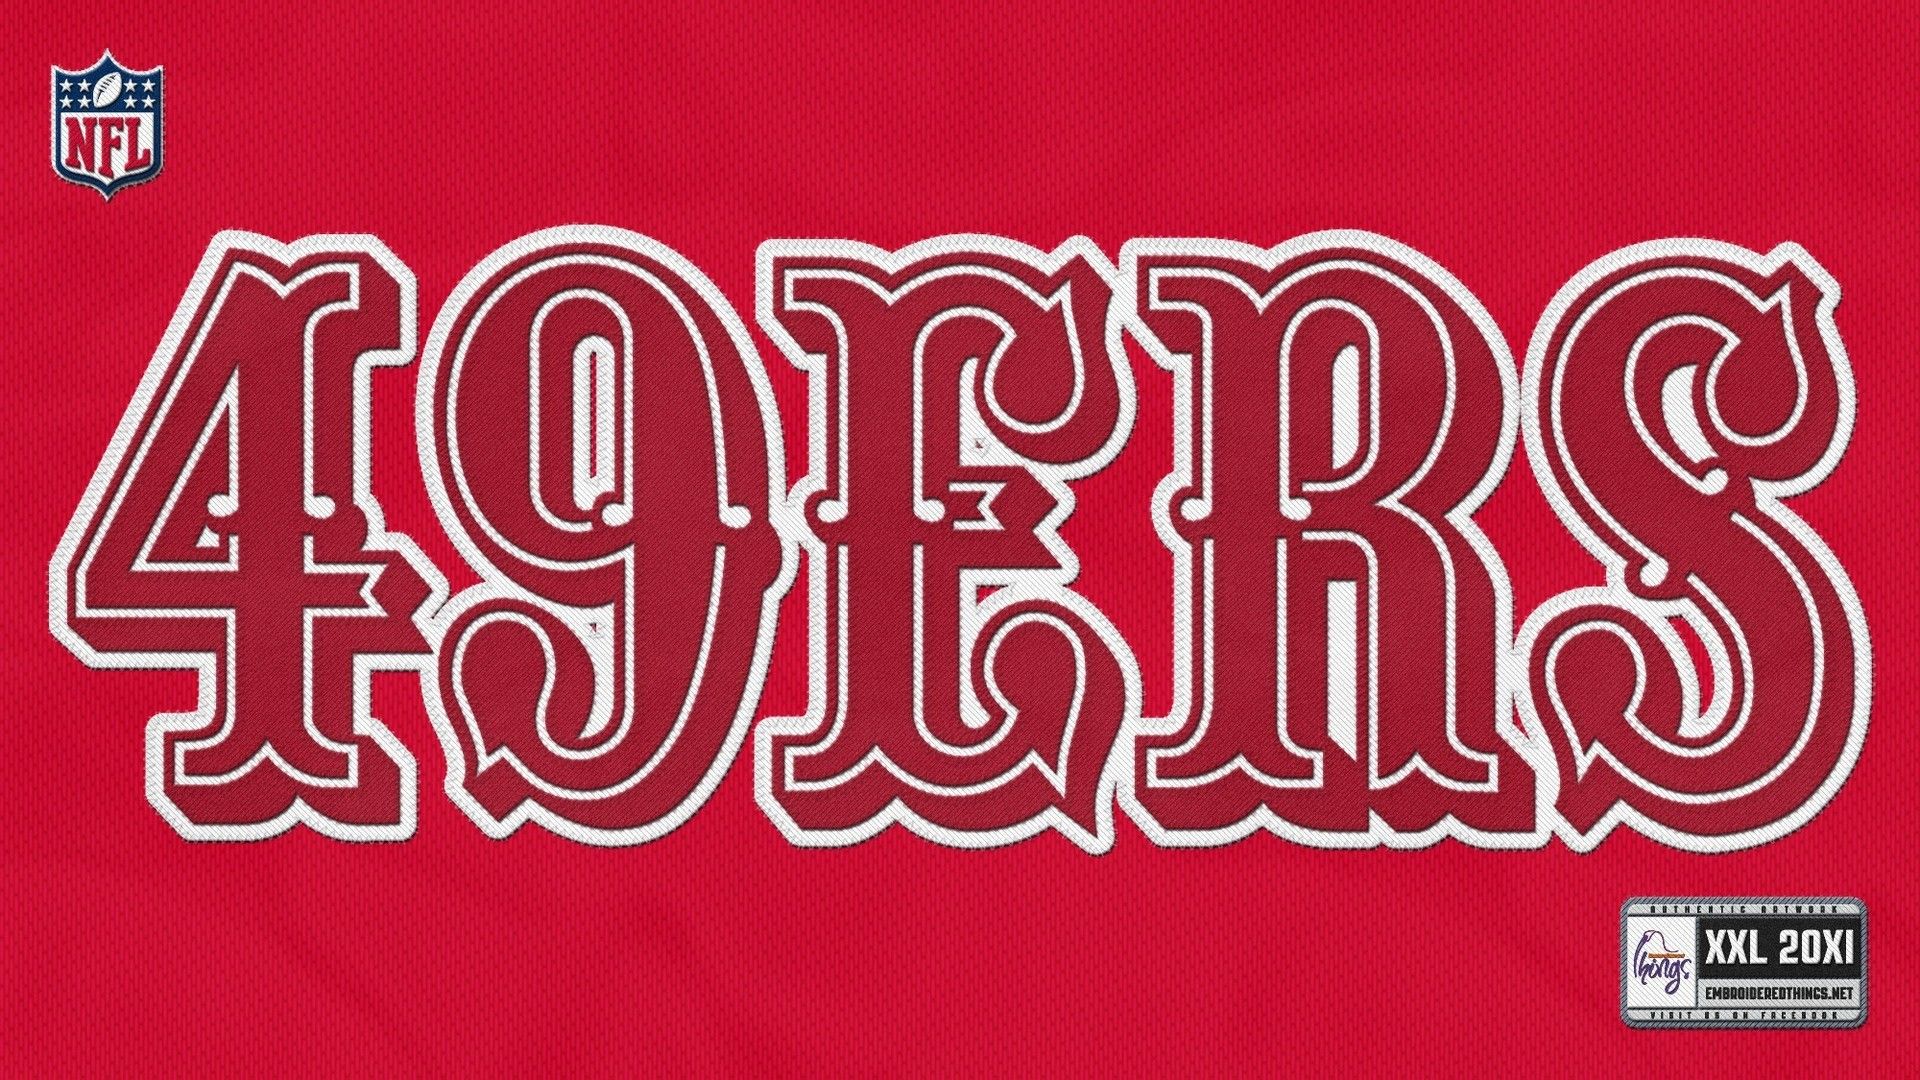 San Francisco 49ers Logo Wallpaper At Wallpaperbro